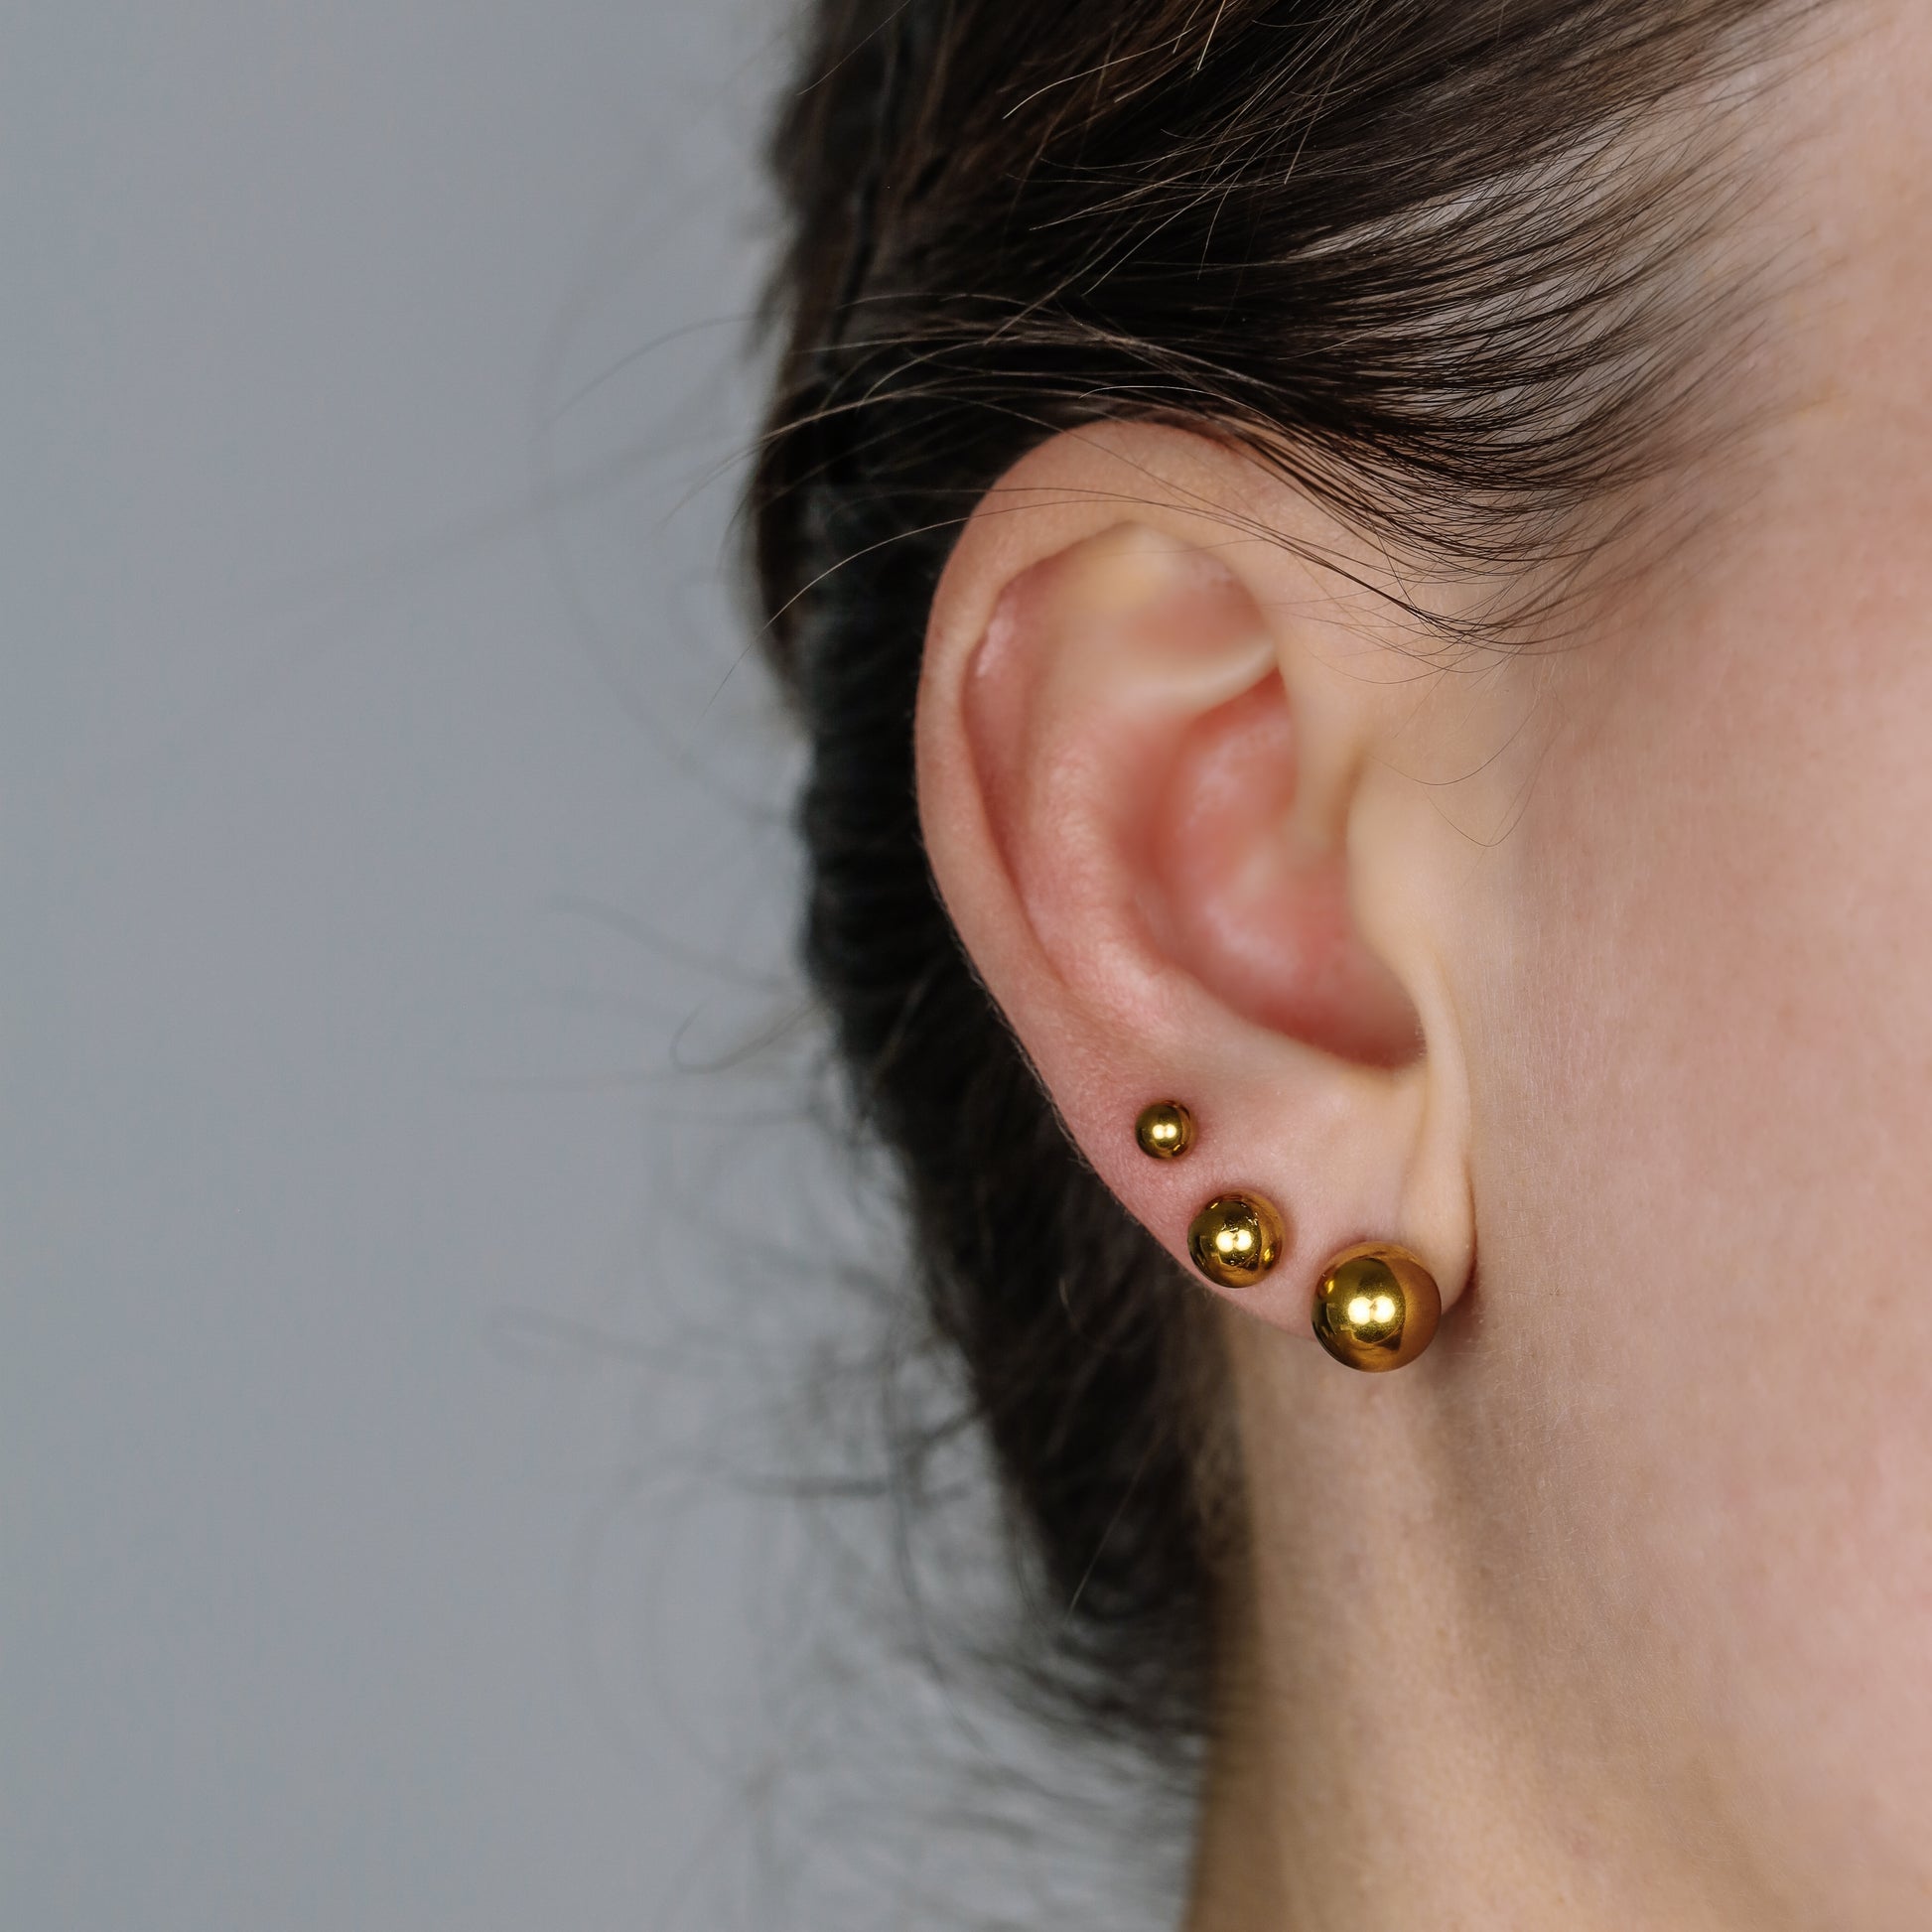 Ball Stud Earrings • Tiny Gold Studs • 4mm 6mm 8mm Gold Ball Studs • Small Stud Earrings • Round Stud Daily wear Studs • BYSDMJEWELS